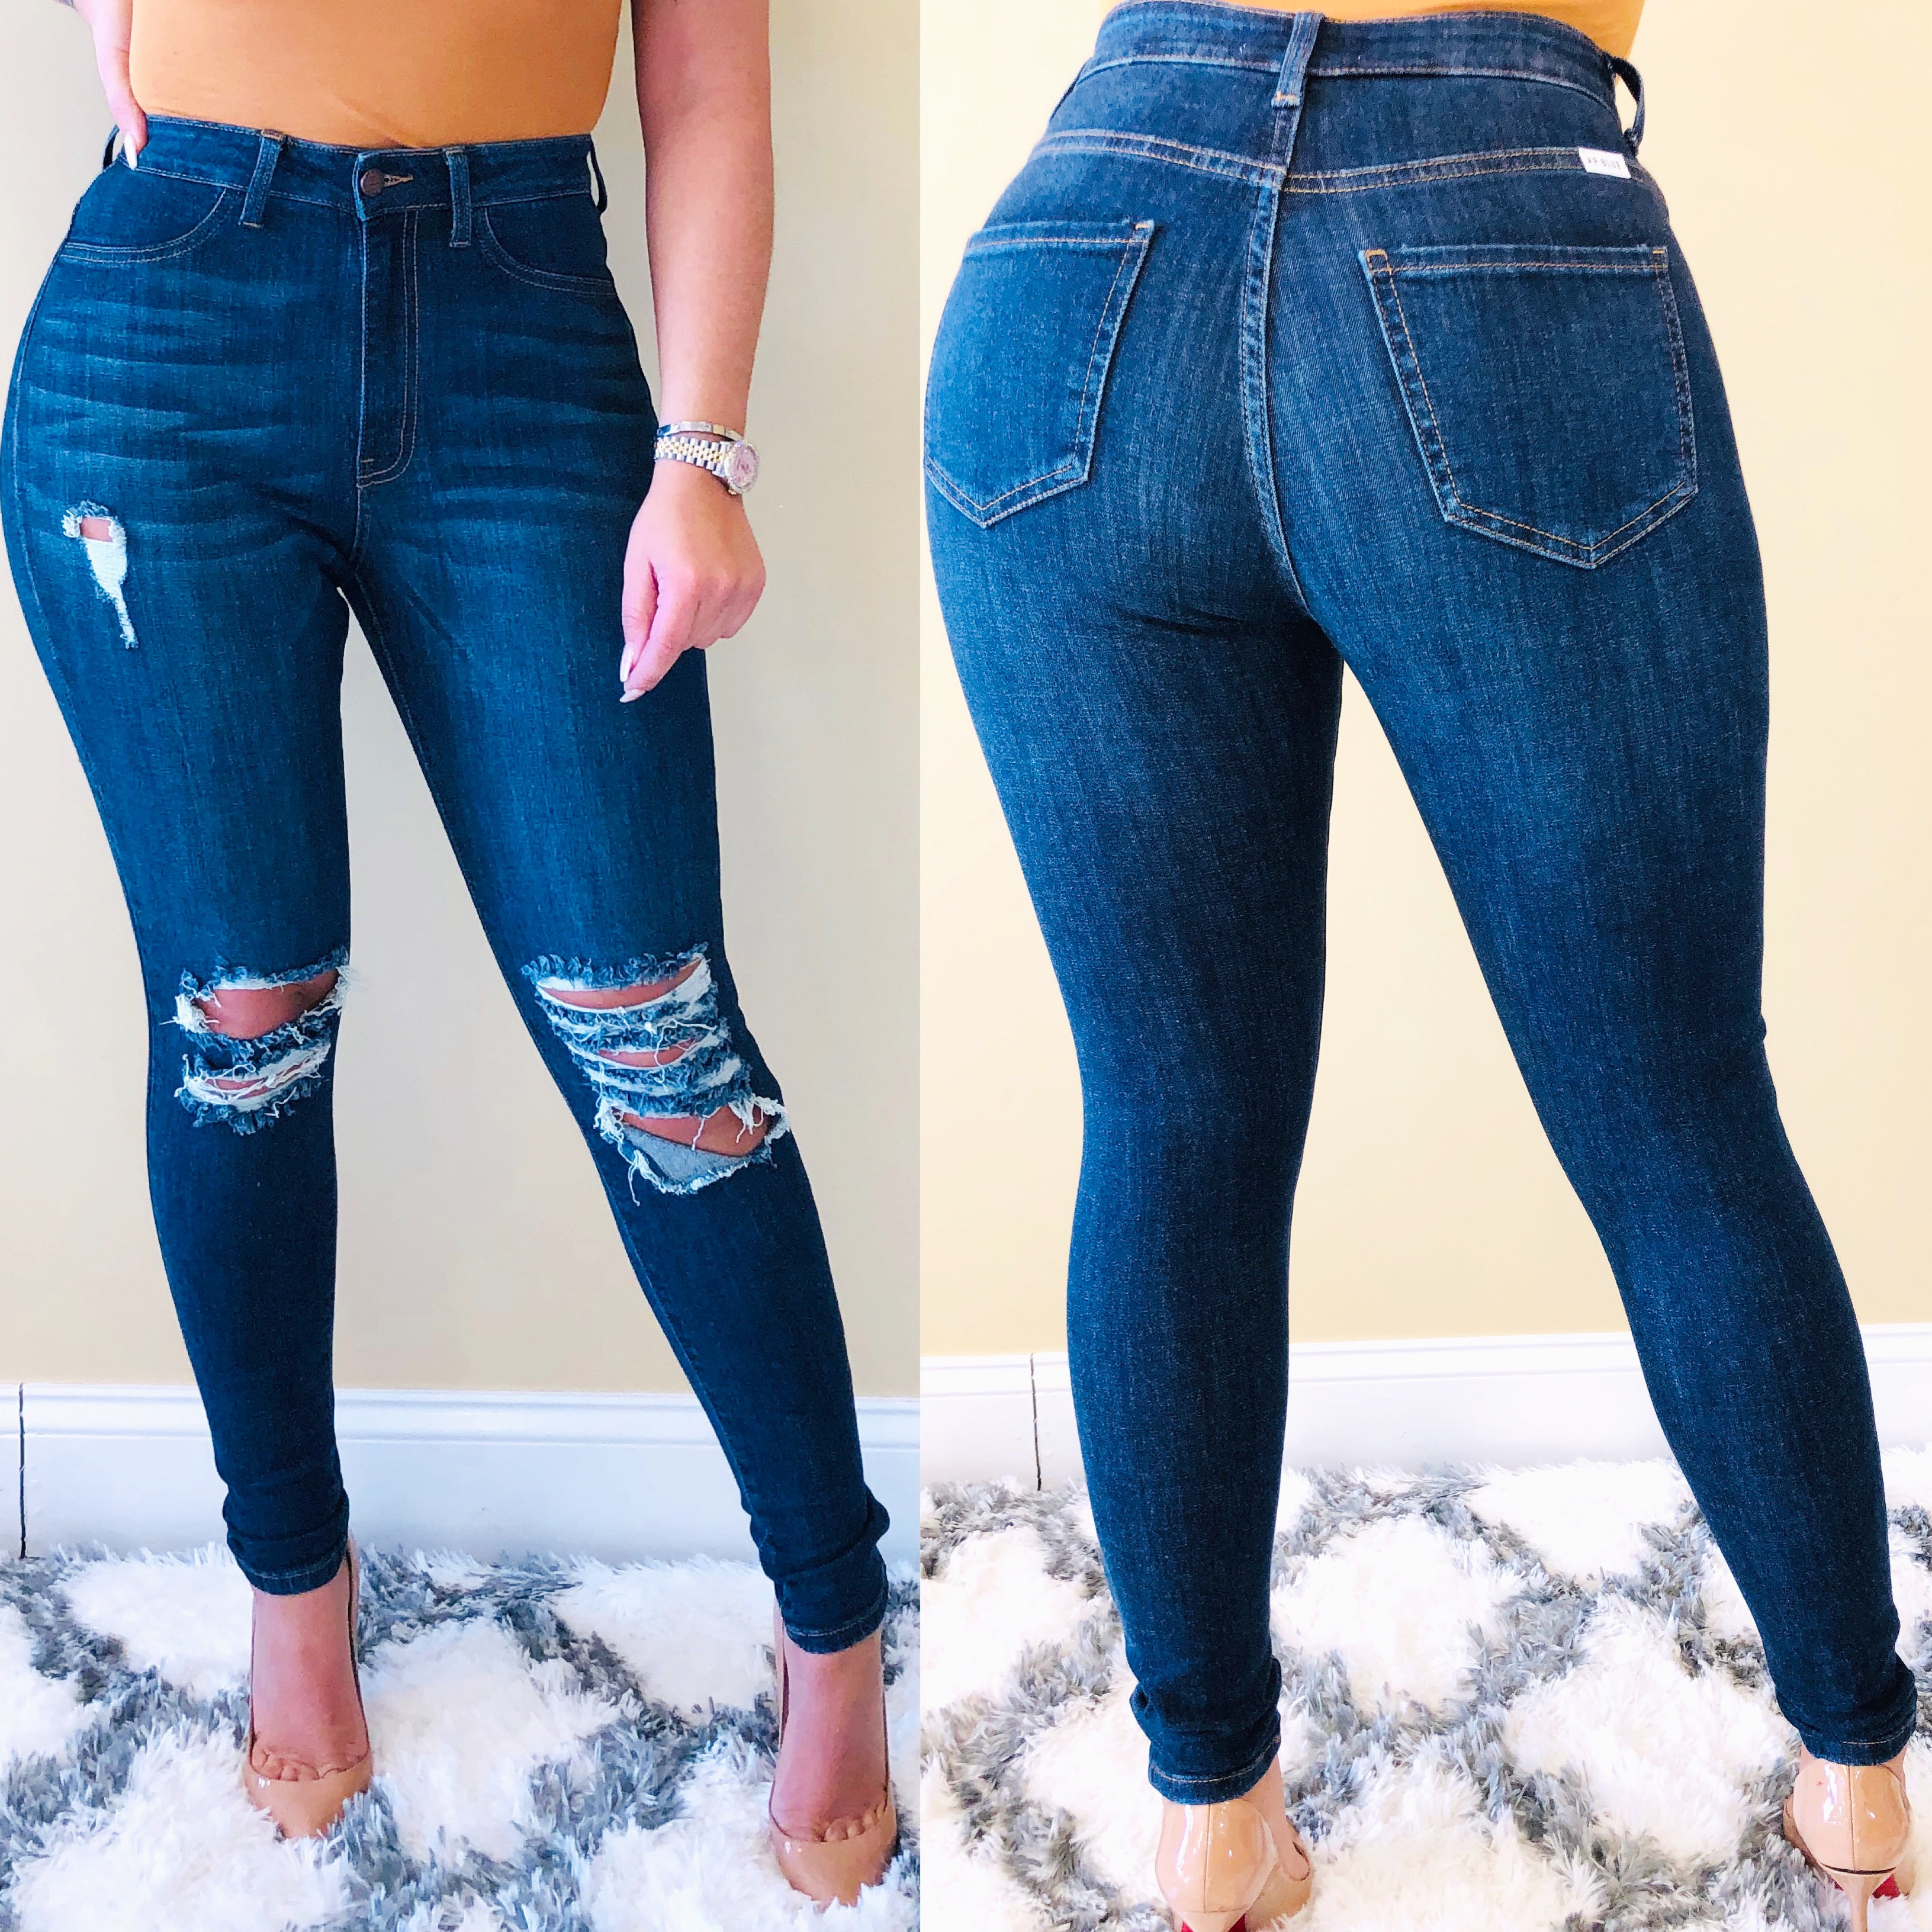 size 5 jeans